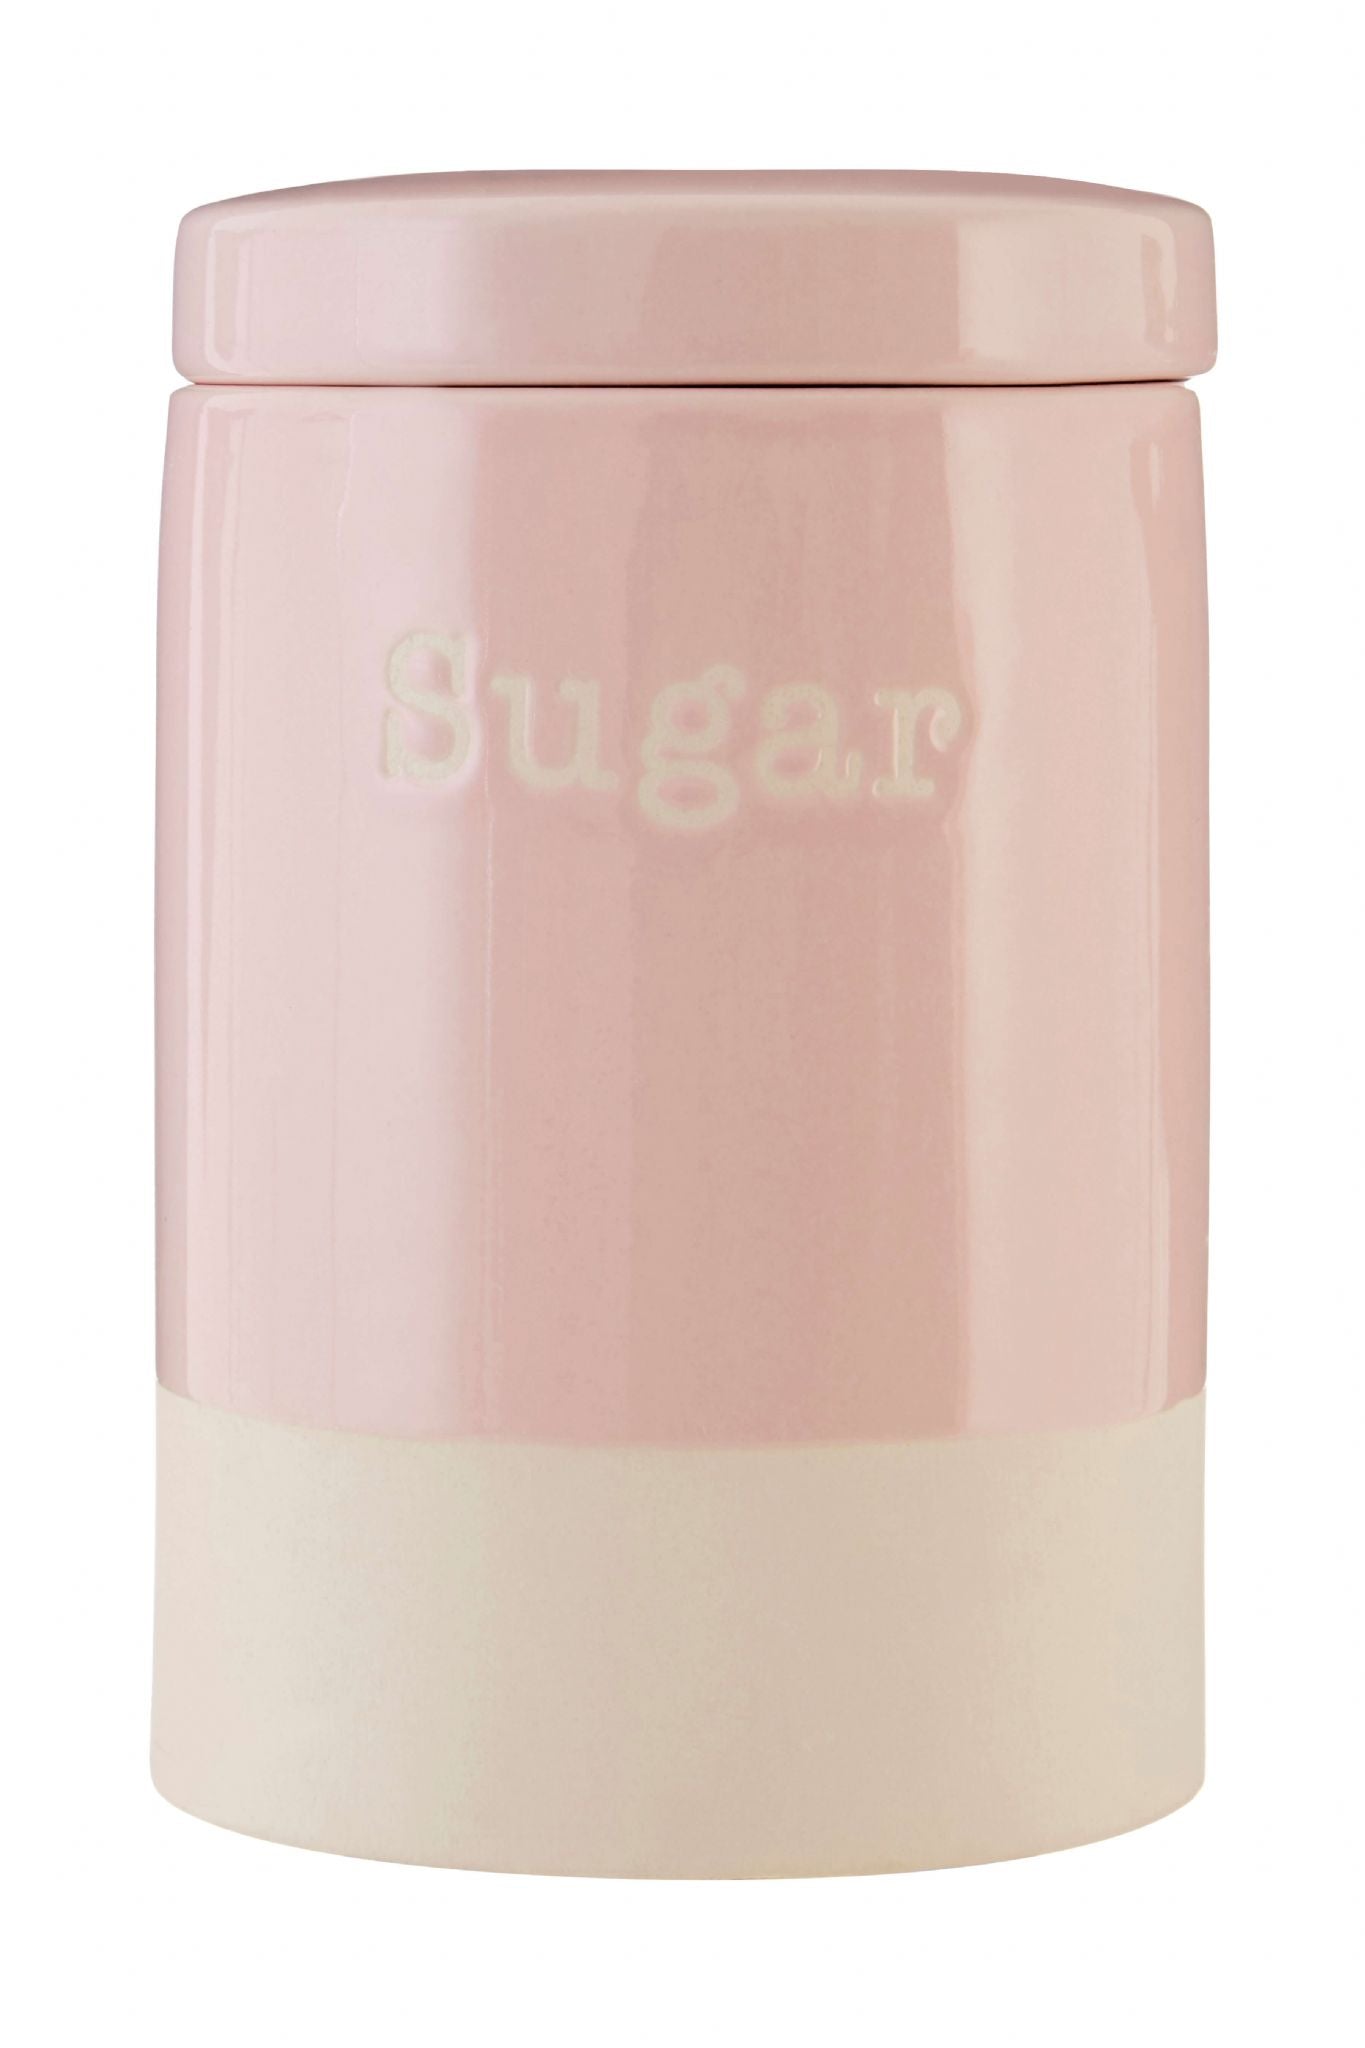 Pastel Pink Sugar Canister - Outlet - Save 20%